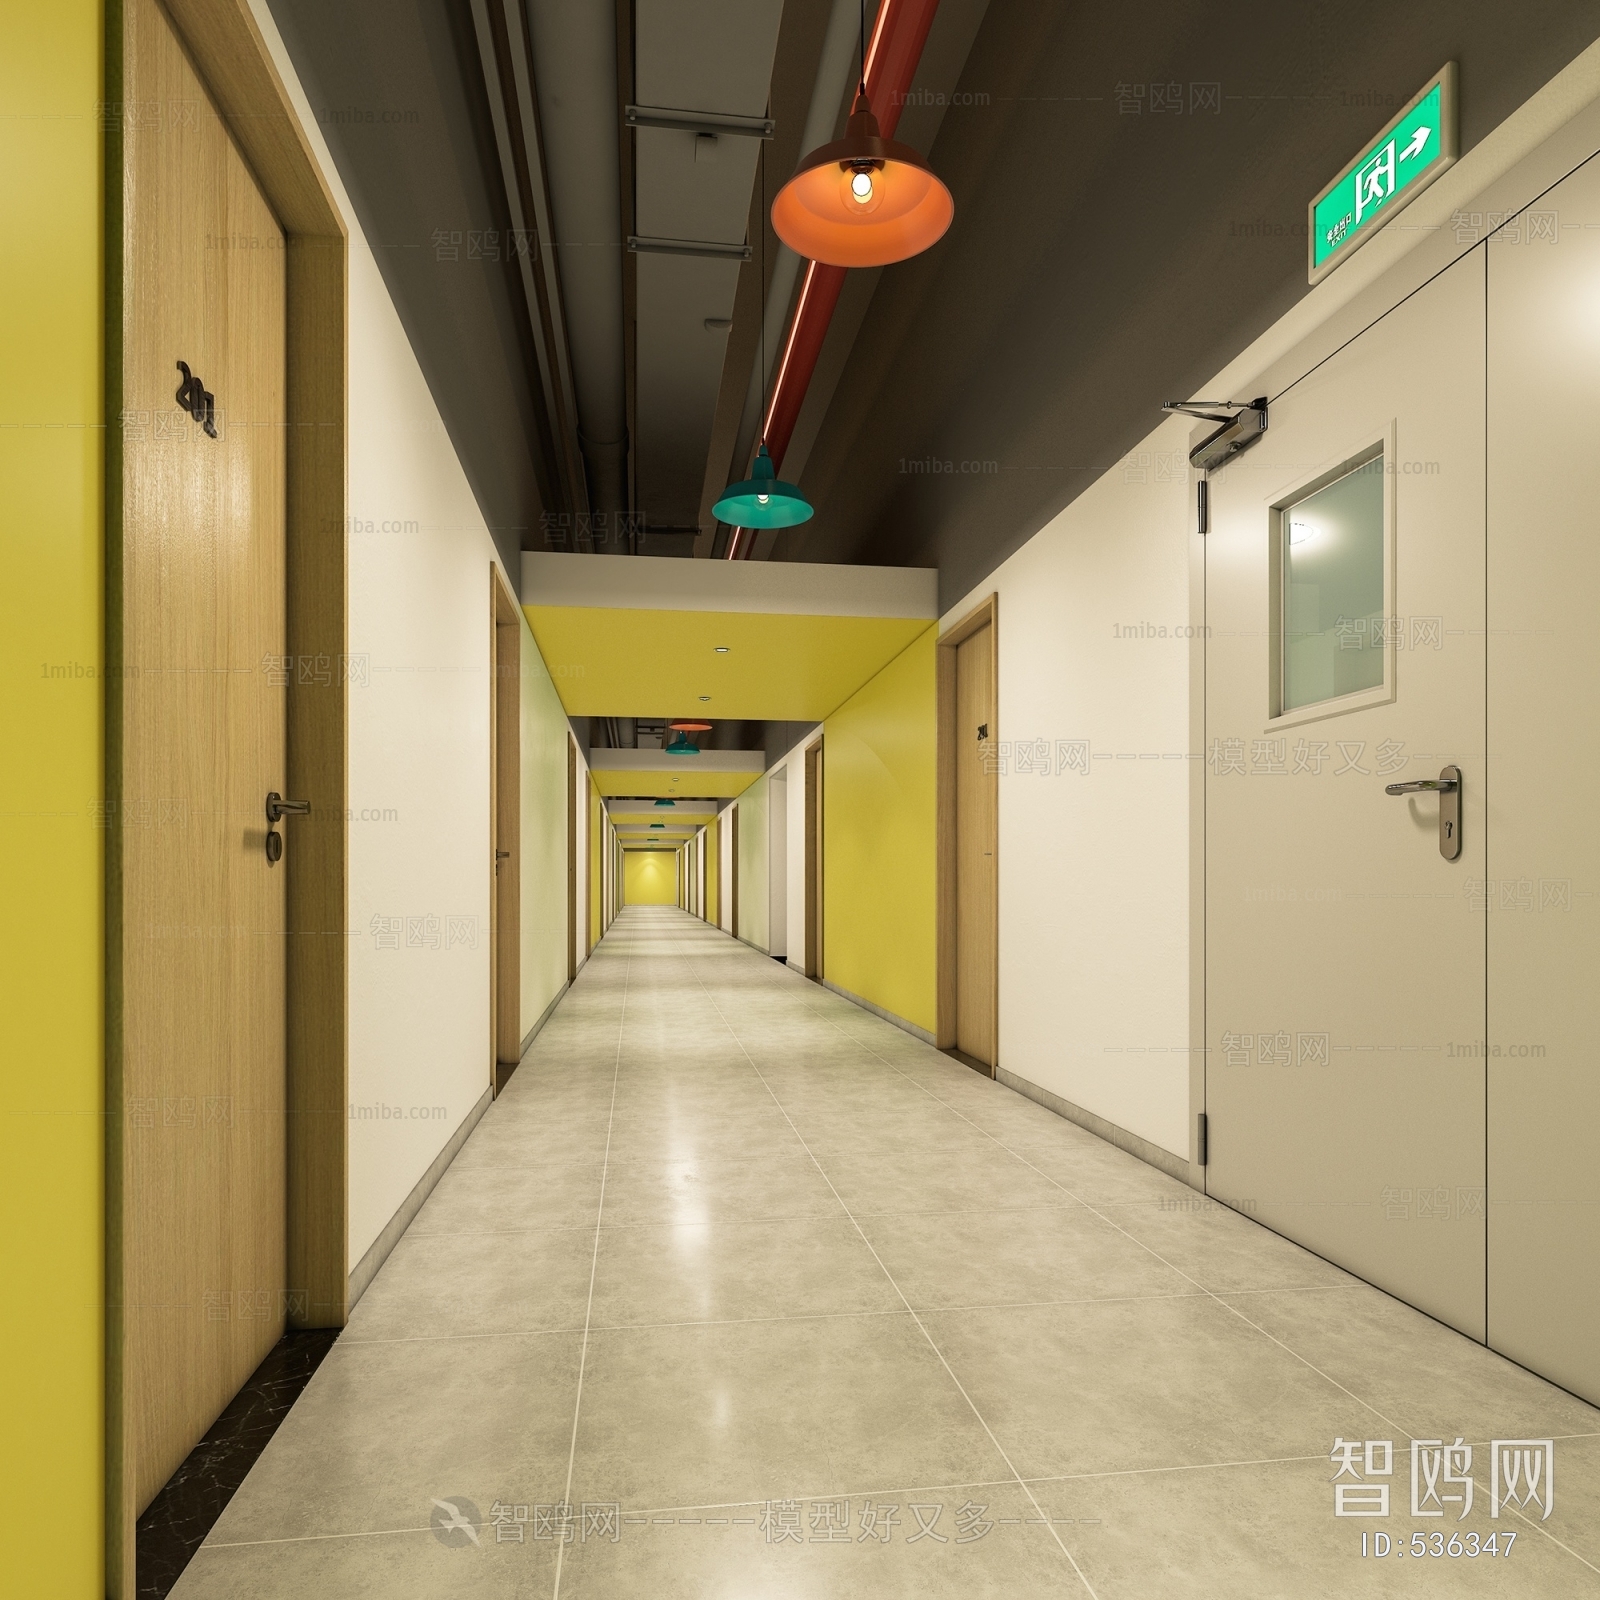 Industrial Style Corridor